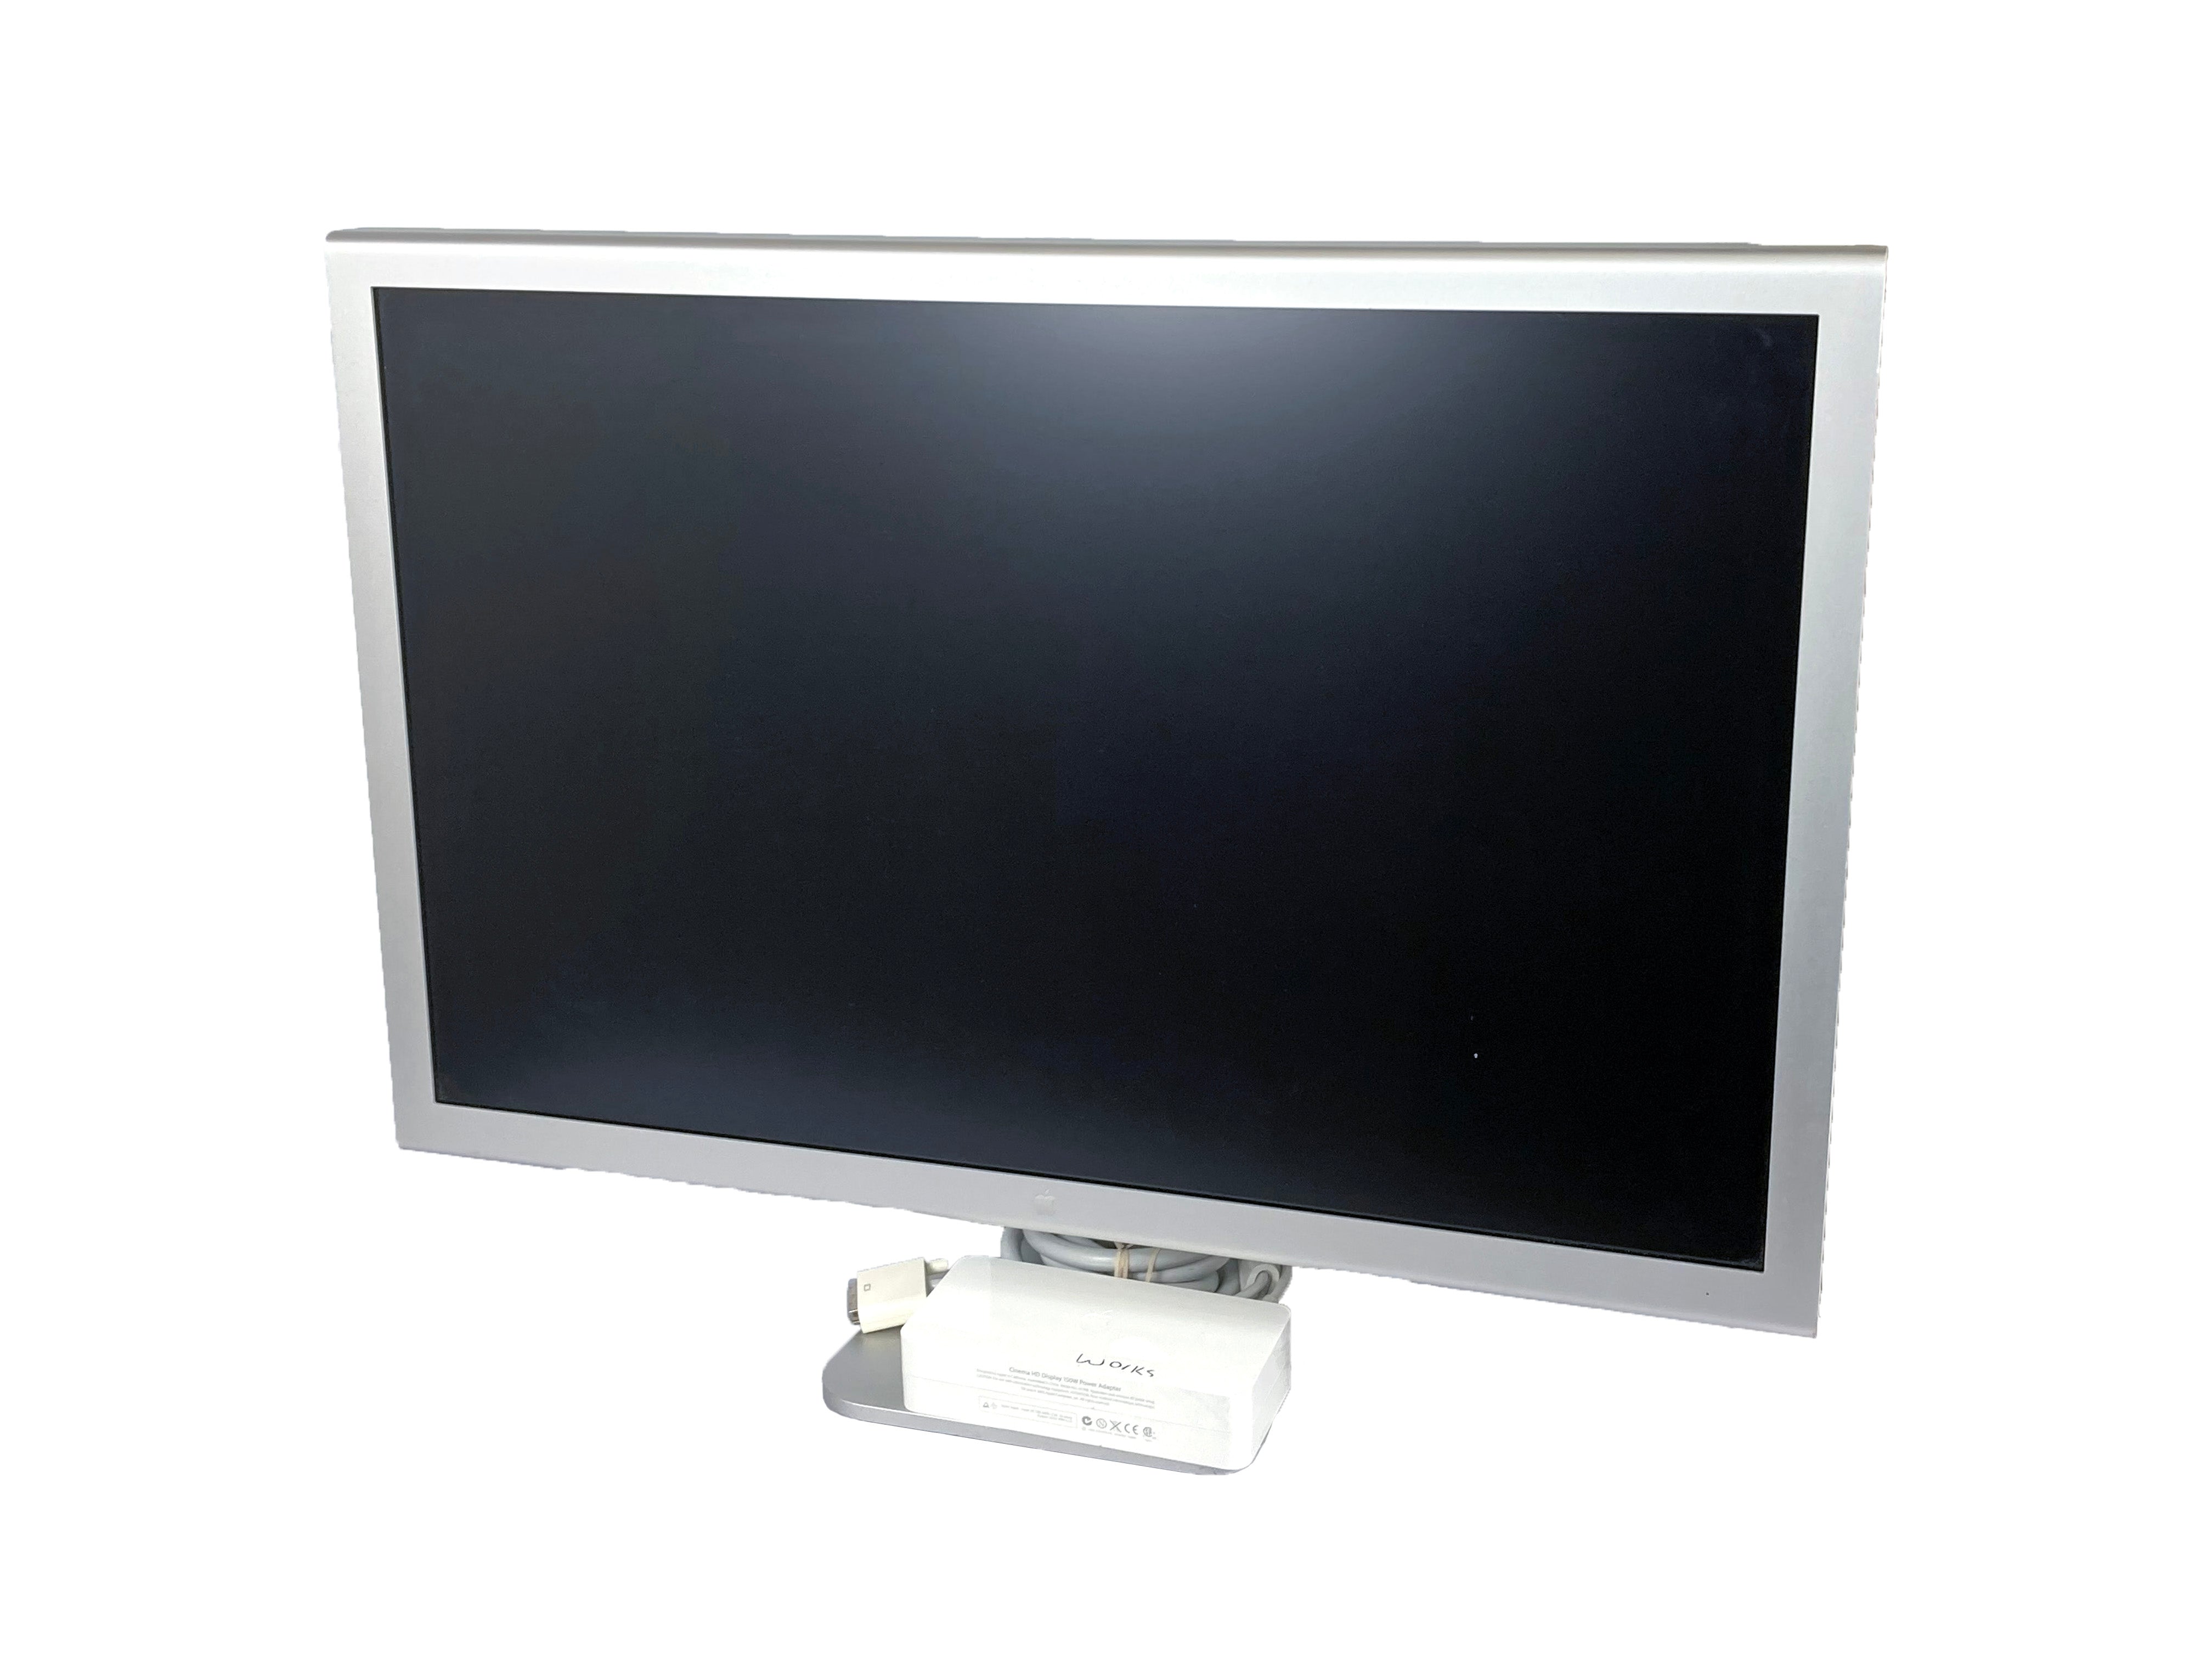 Apple Cinema Display 30" Widescreen LCD Monitor #1